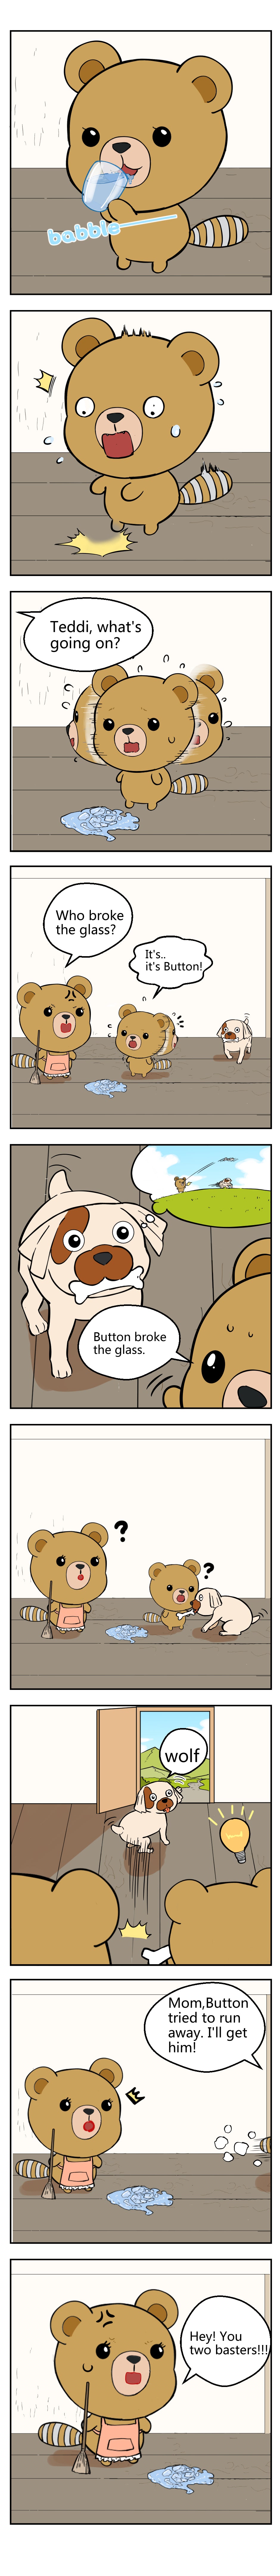 magic buddies comic blame to the dog funny cute comic